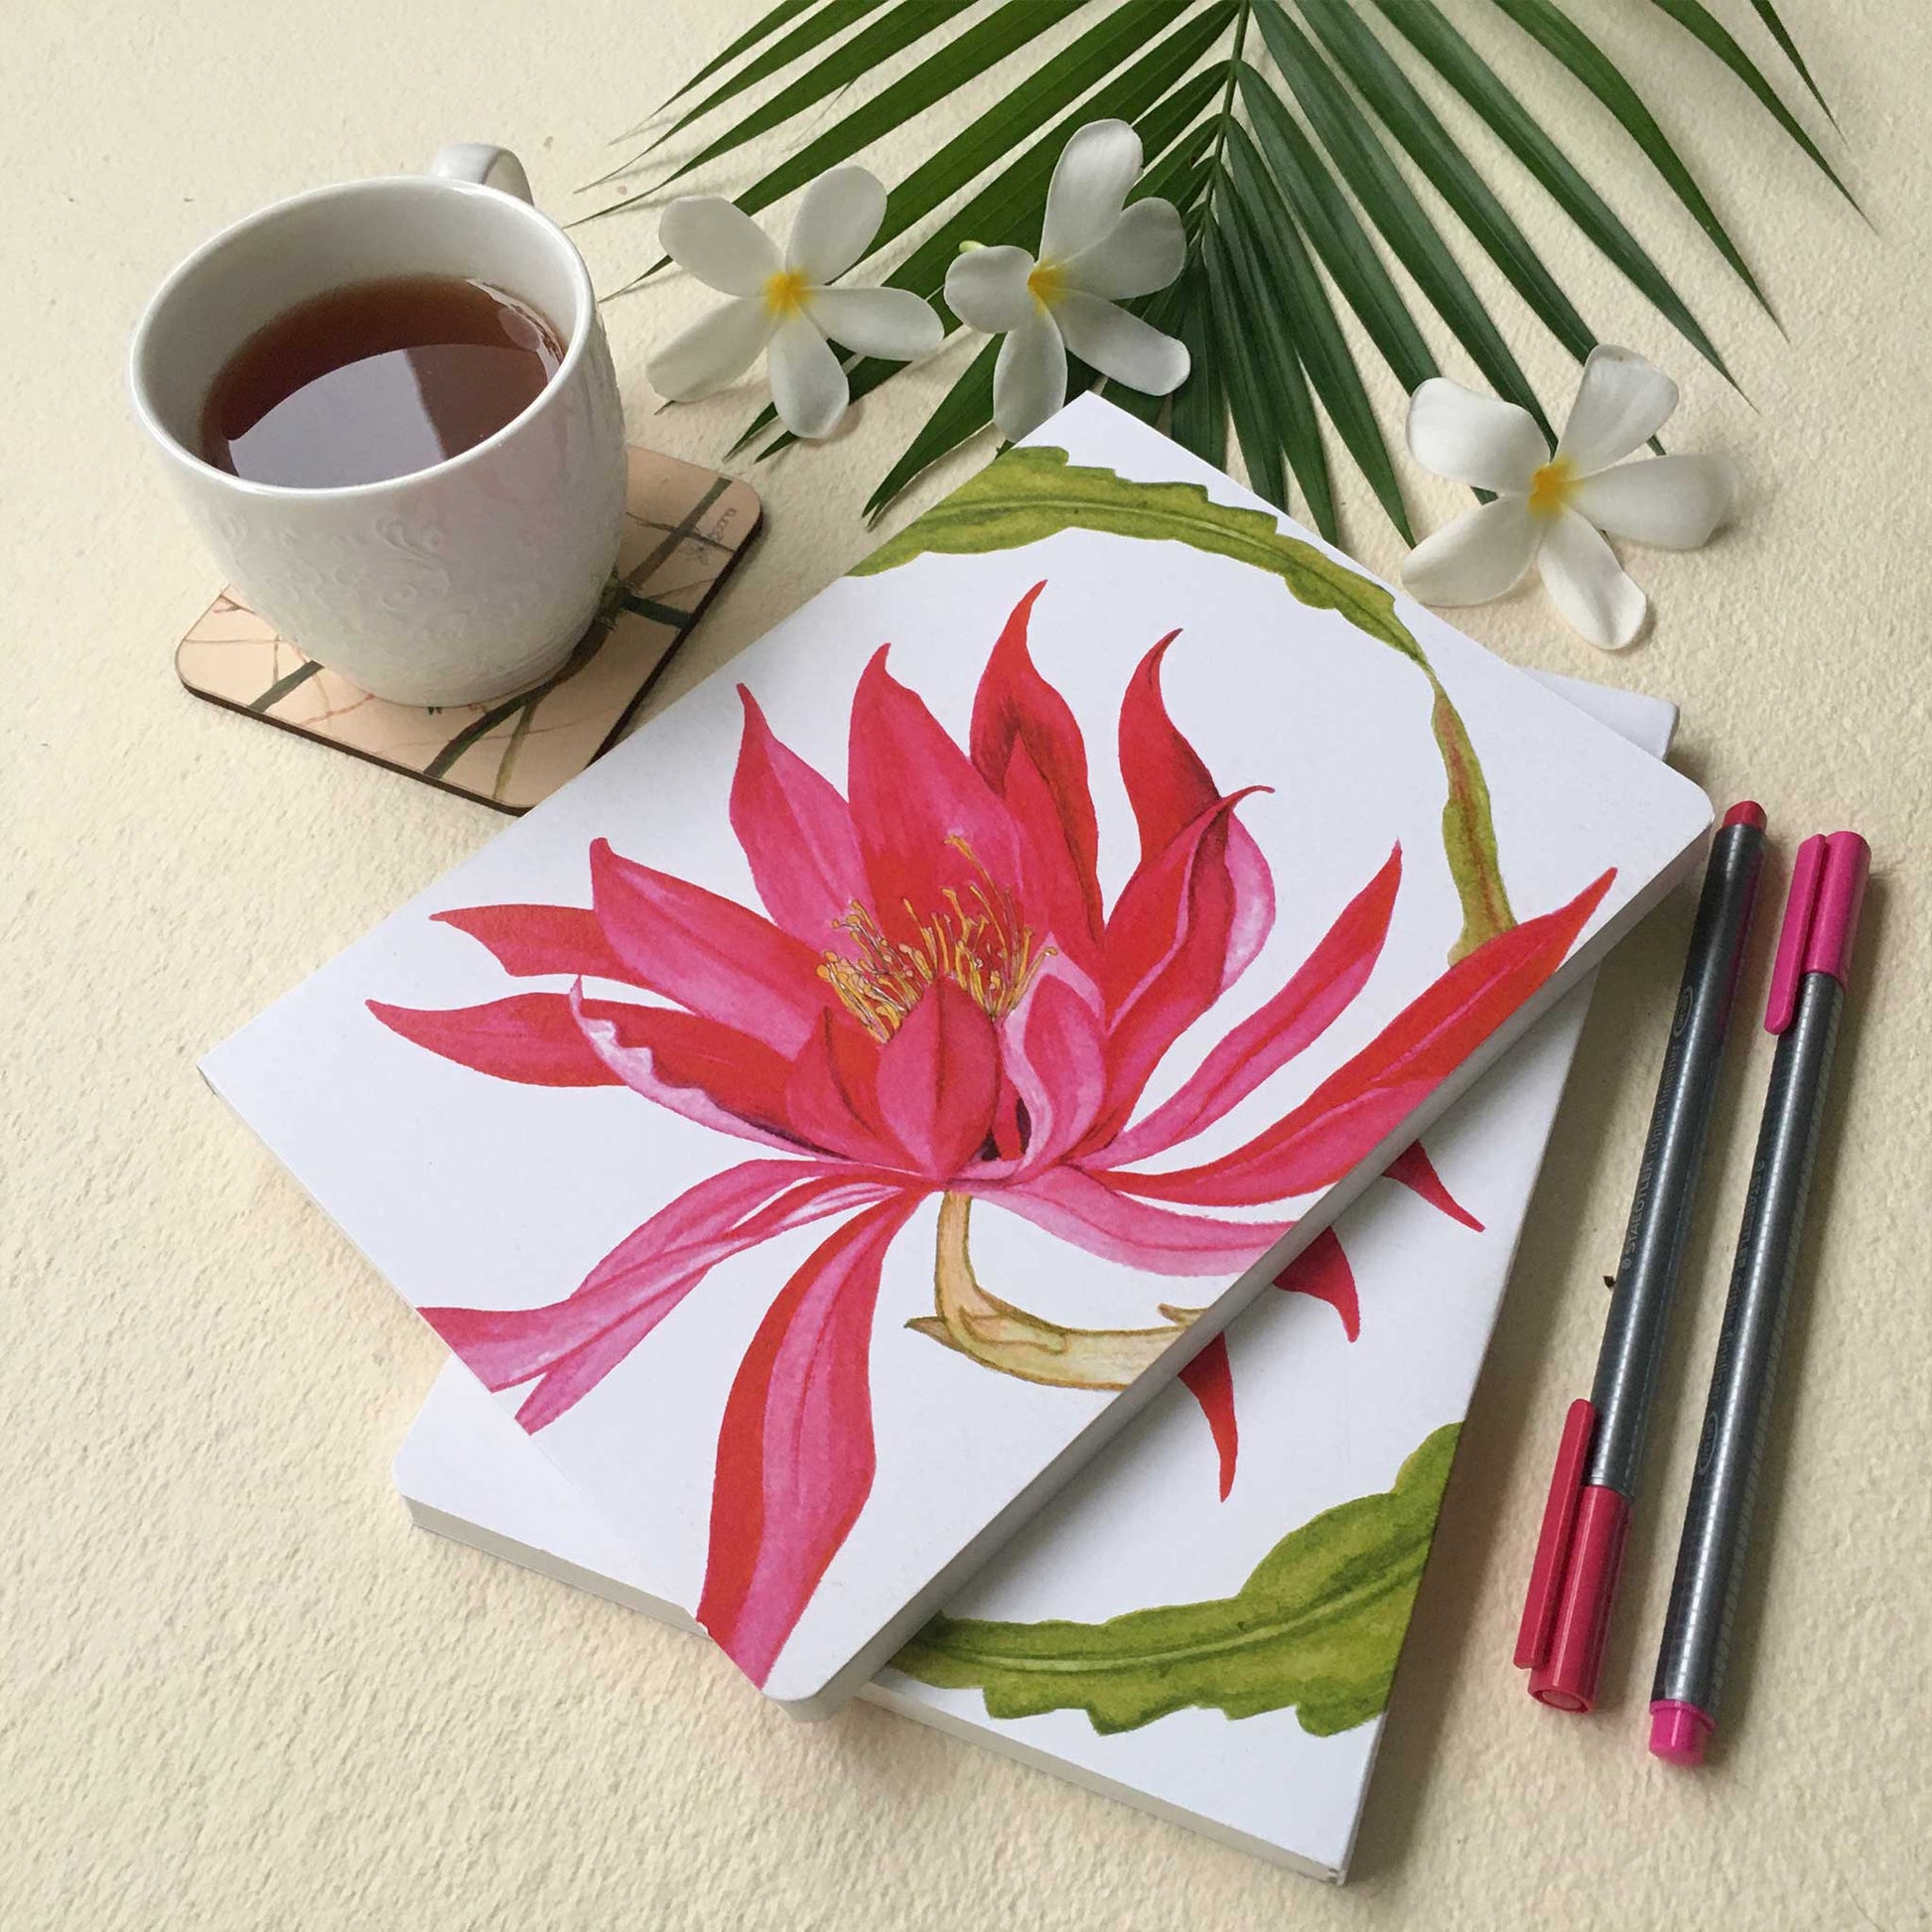 Studio Decorai Stationery The Elena Rose - Flower Themed Notebook